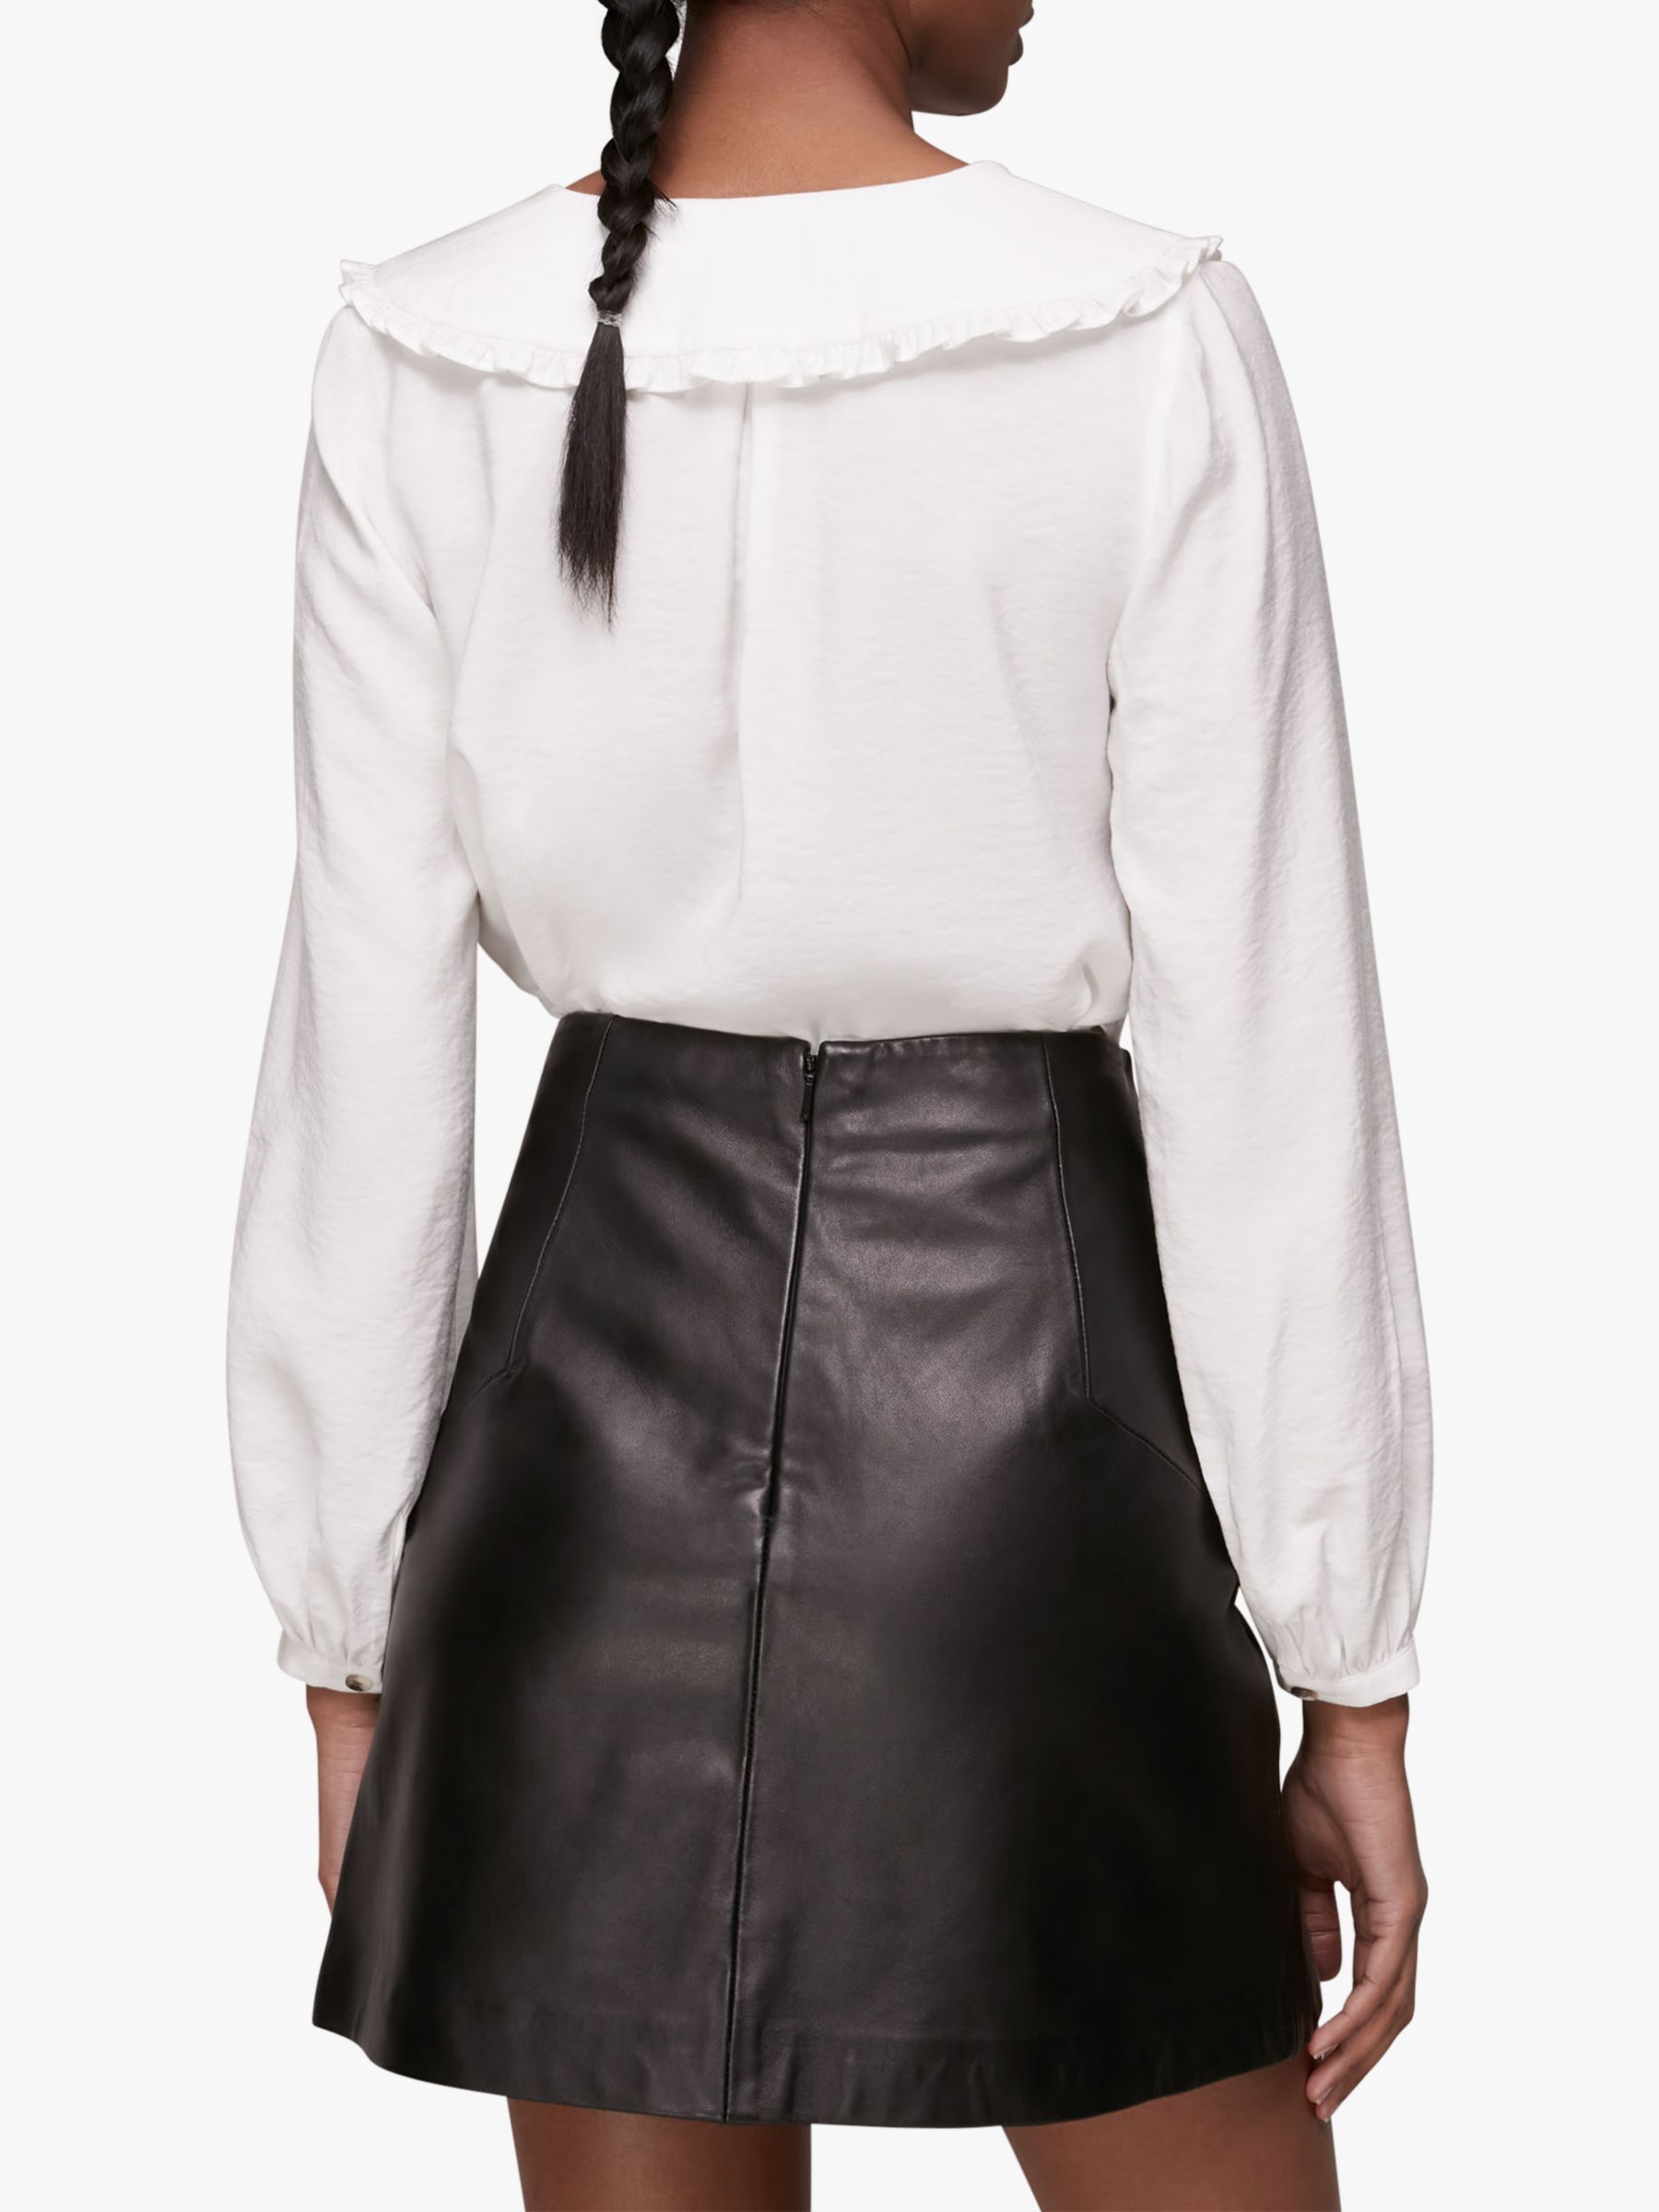 Whistles A-Line Mini Leather Skirt, Black at John Lewis & Partners